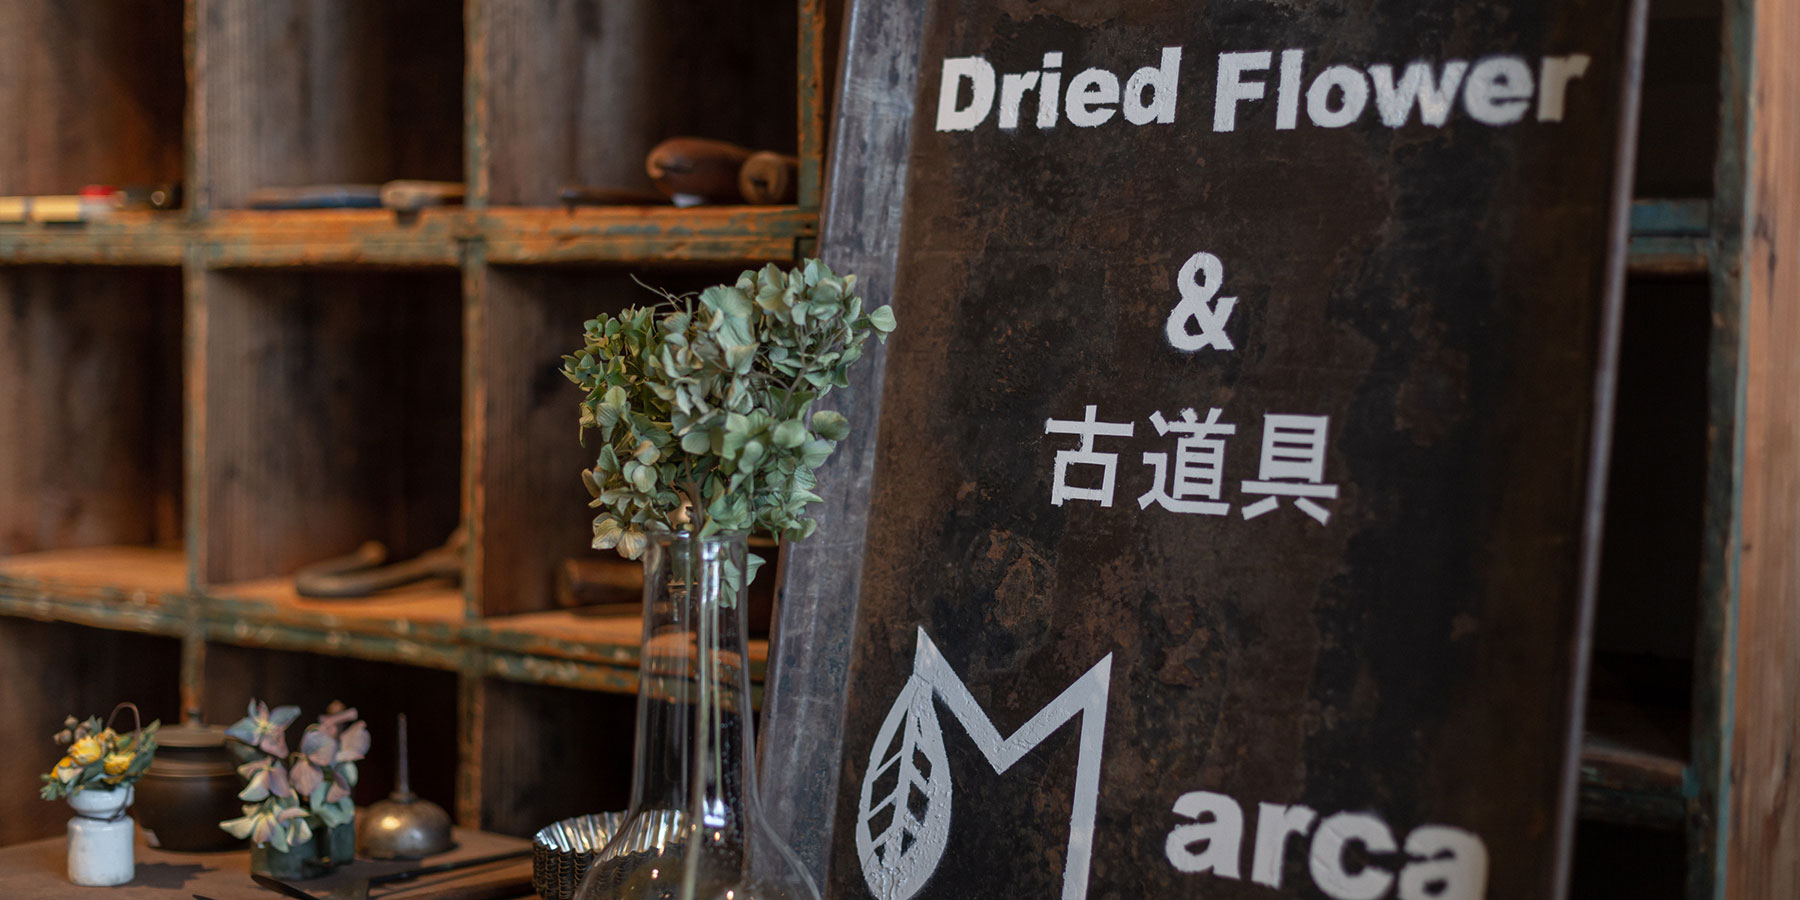 Dried Flower & 古道具 Marca